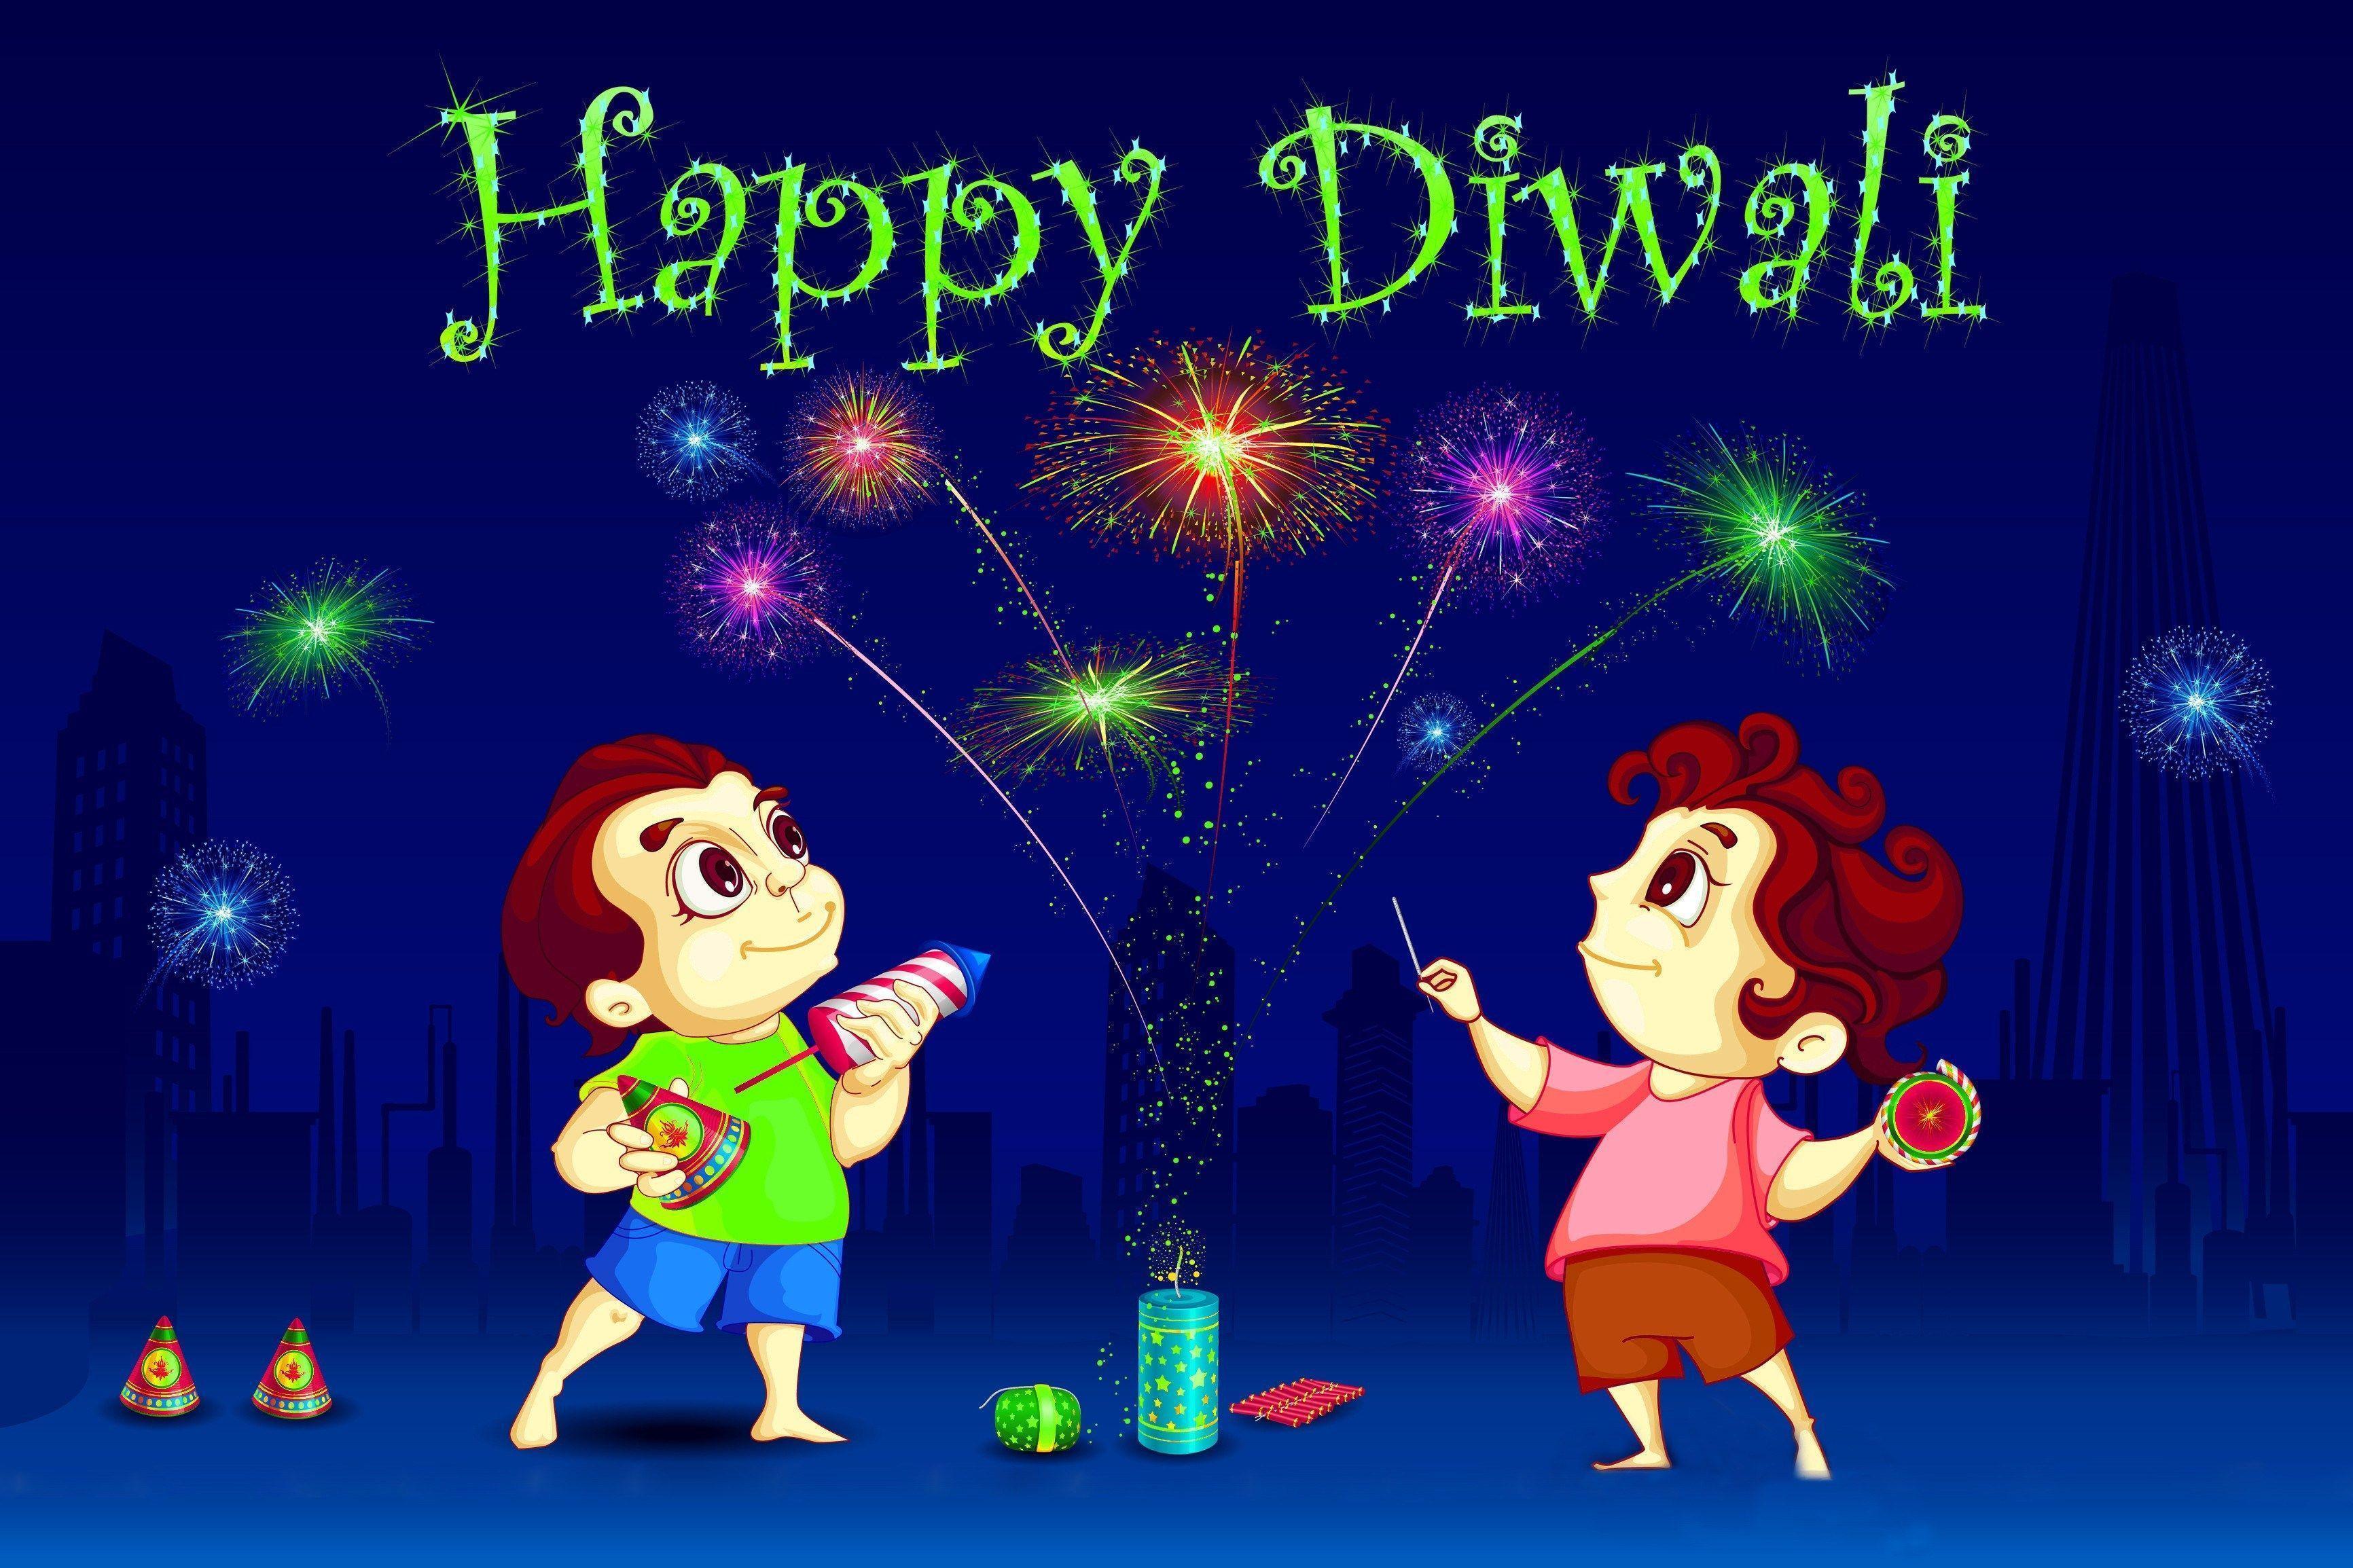 Diwali Wallpaper 2016: Download Free & Latest HD Diwali Wallpaper